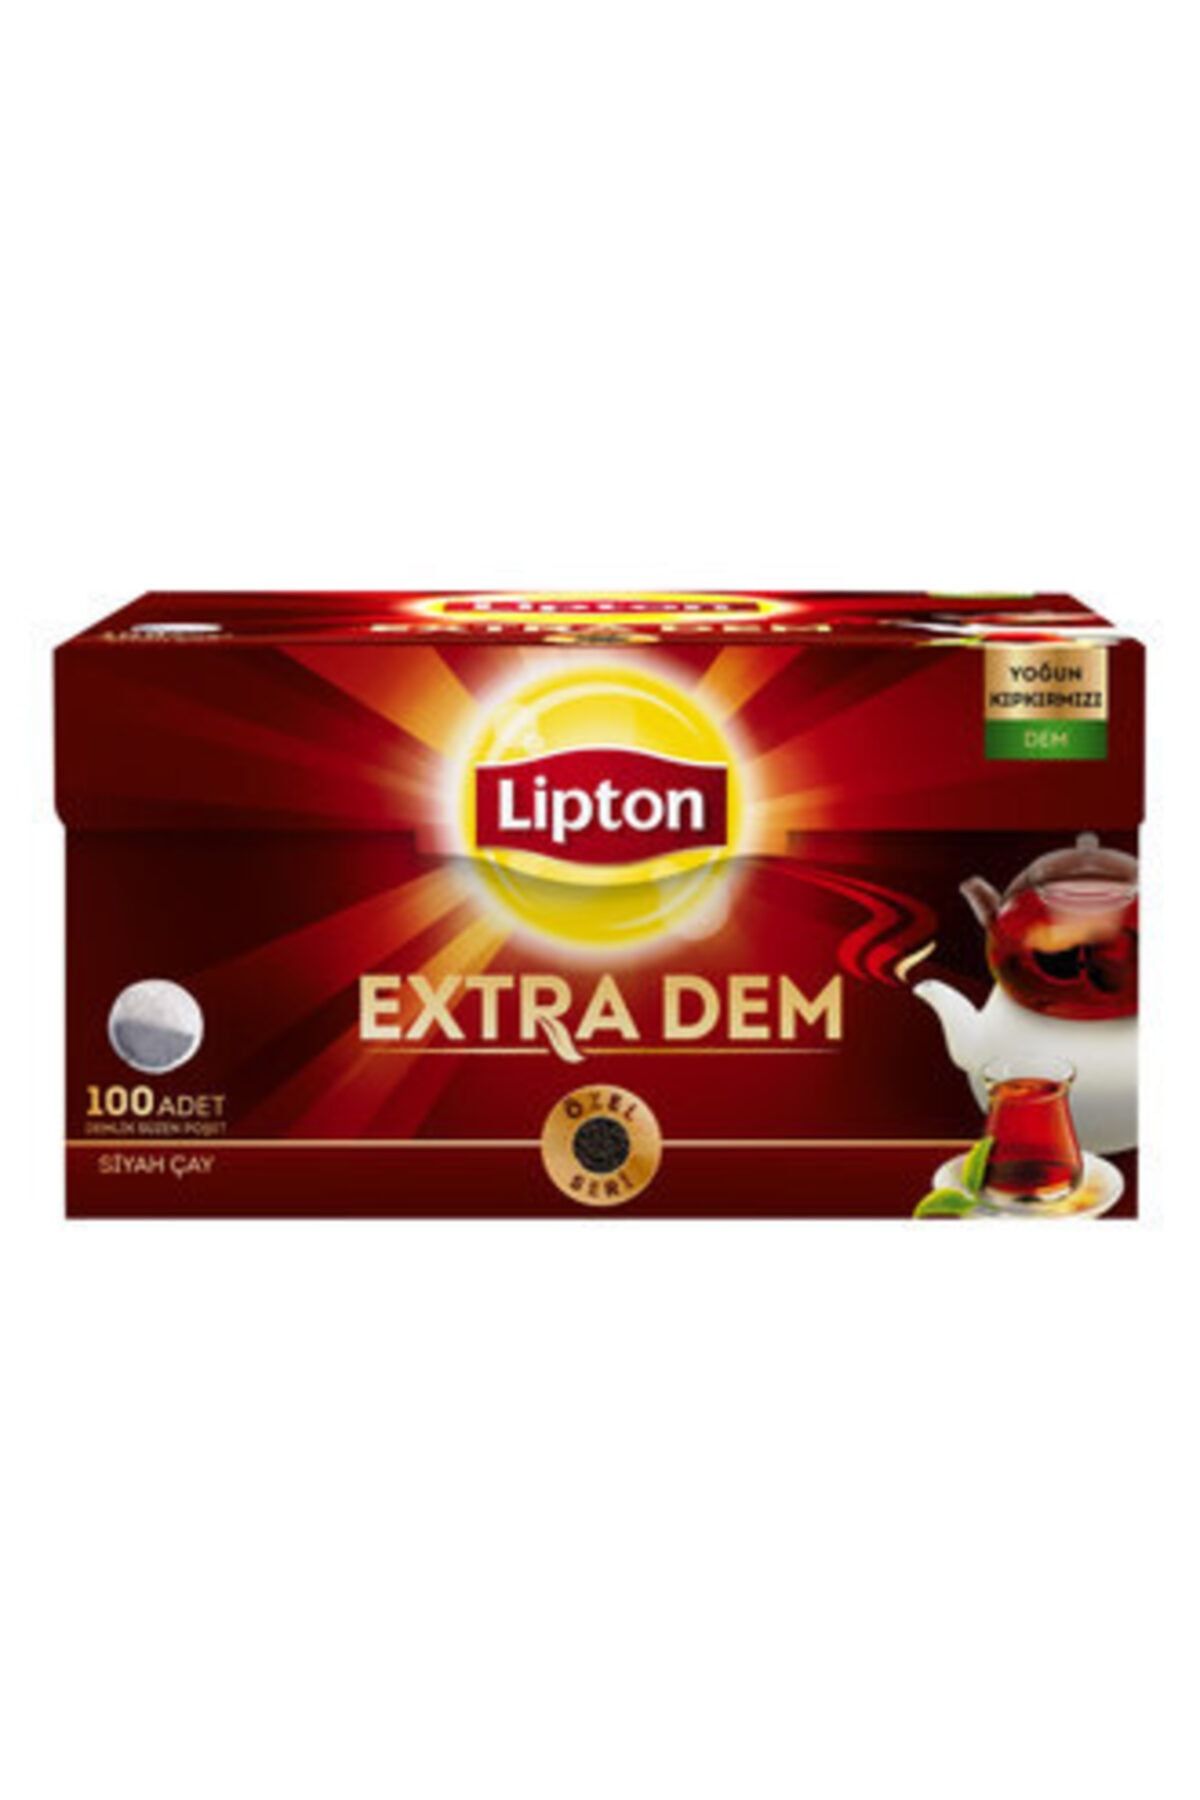 Lipton Extra Dem Demlik Poşet Çay 100'Lü 320 gr